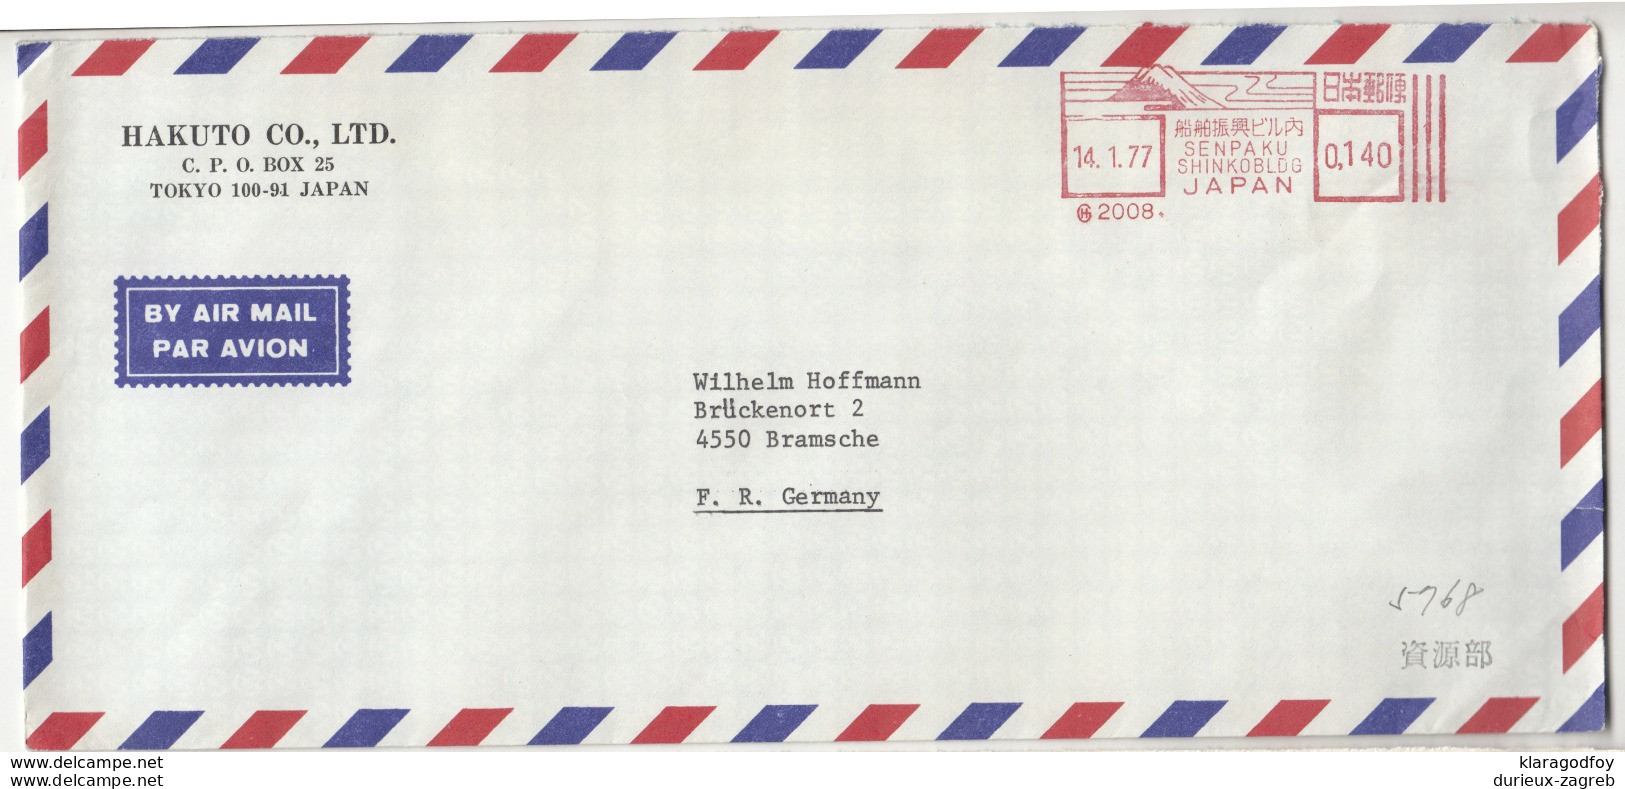 Hakuto Co., Tokyo Company Air Mail Letter Cover Travelled 1977 To Germany - Senpaku Shinkoblog Meter Stamp B190922 - Briefe U. Dokumente